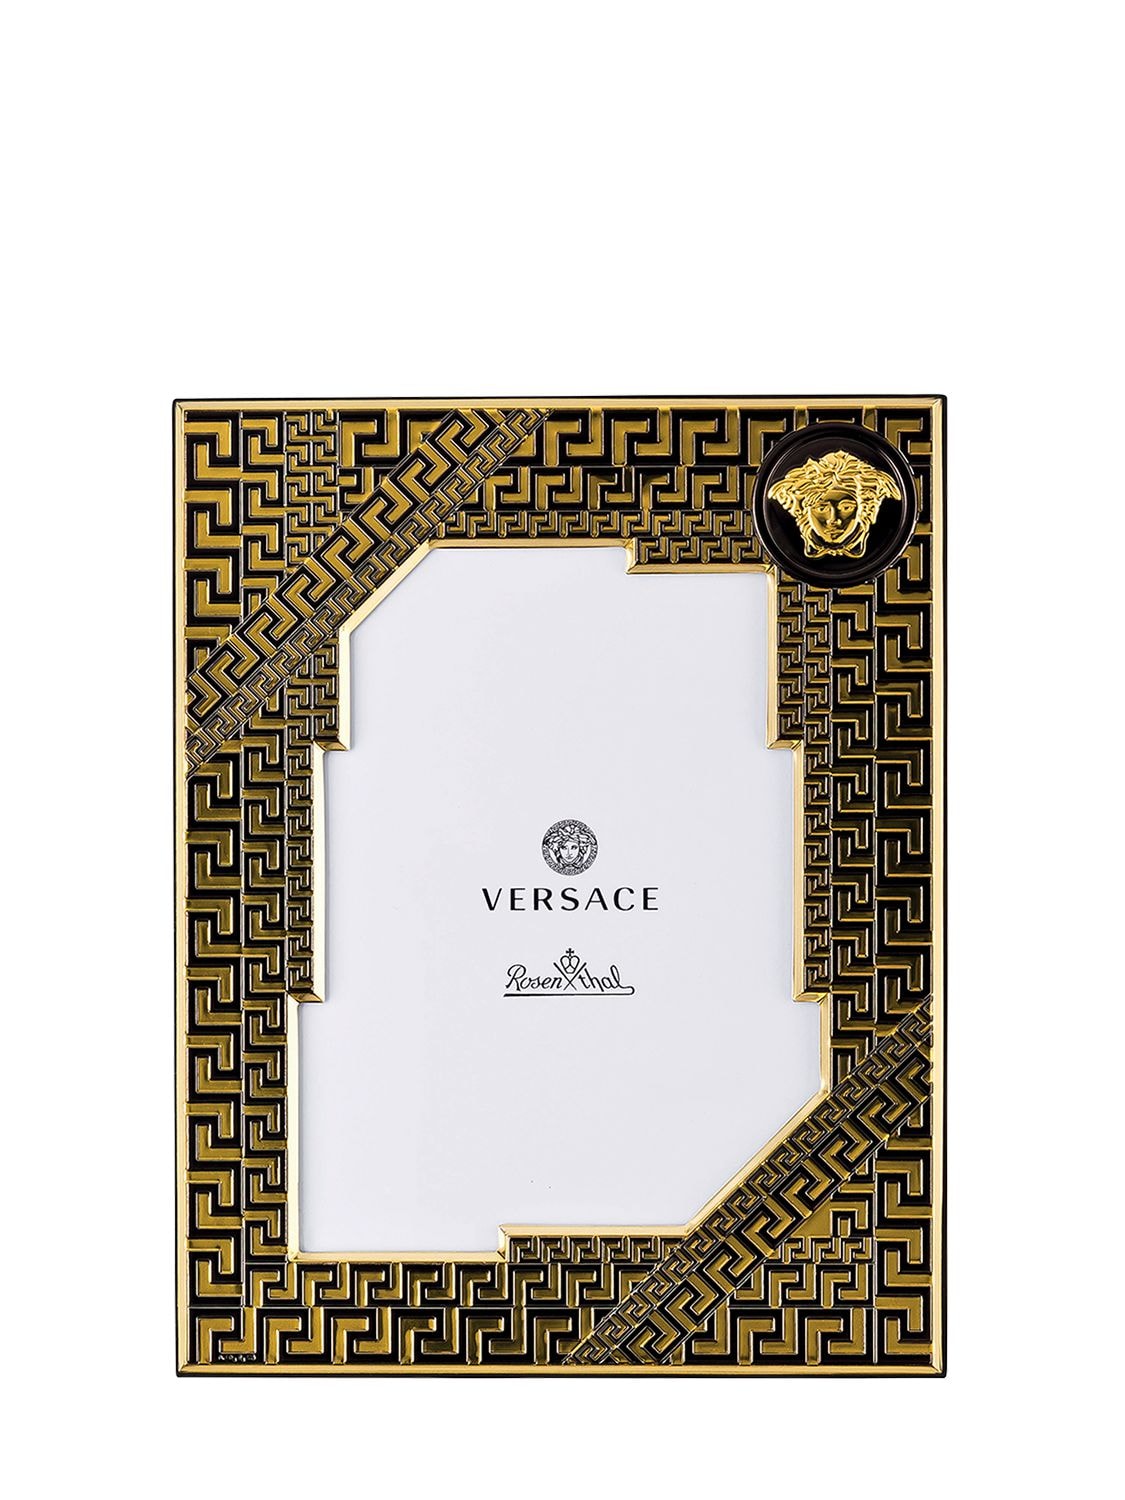 Versace 希腊回纹图案涂漆金属镜框 In Gold,black